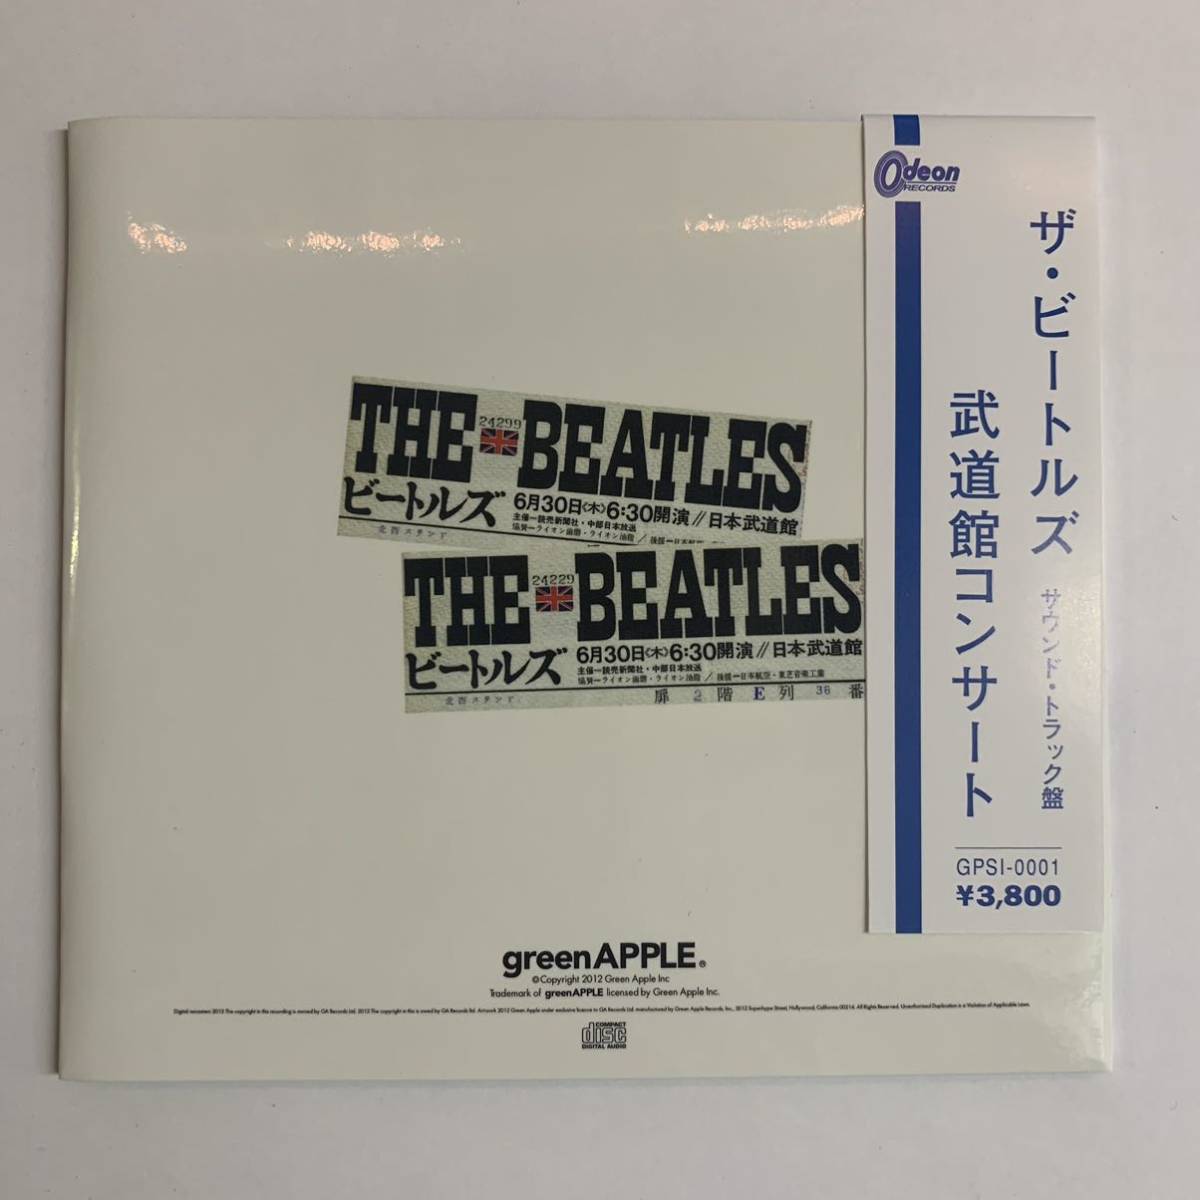 THE BEATLES / LIVE AT BUDOKAN「武道館コンサート」CD 限定サマーセール！ここまで造りこまれた紙ジャケットはまさにコレクター仕様！の画像2